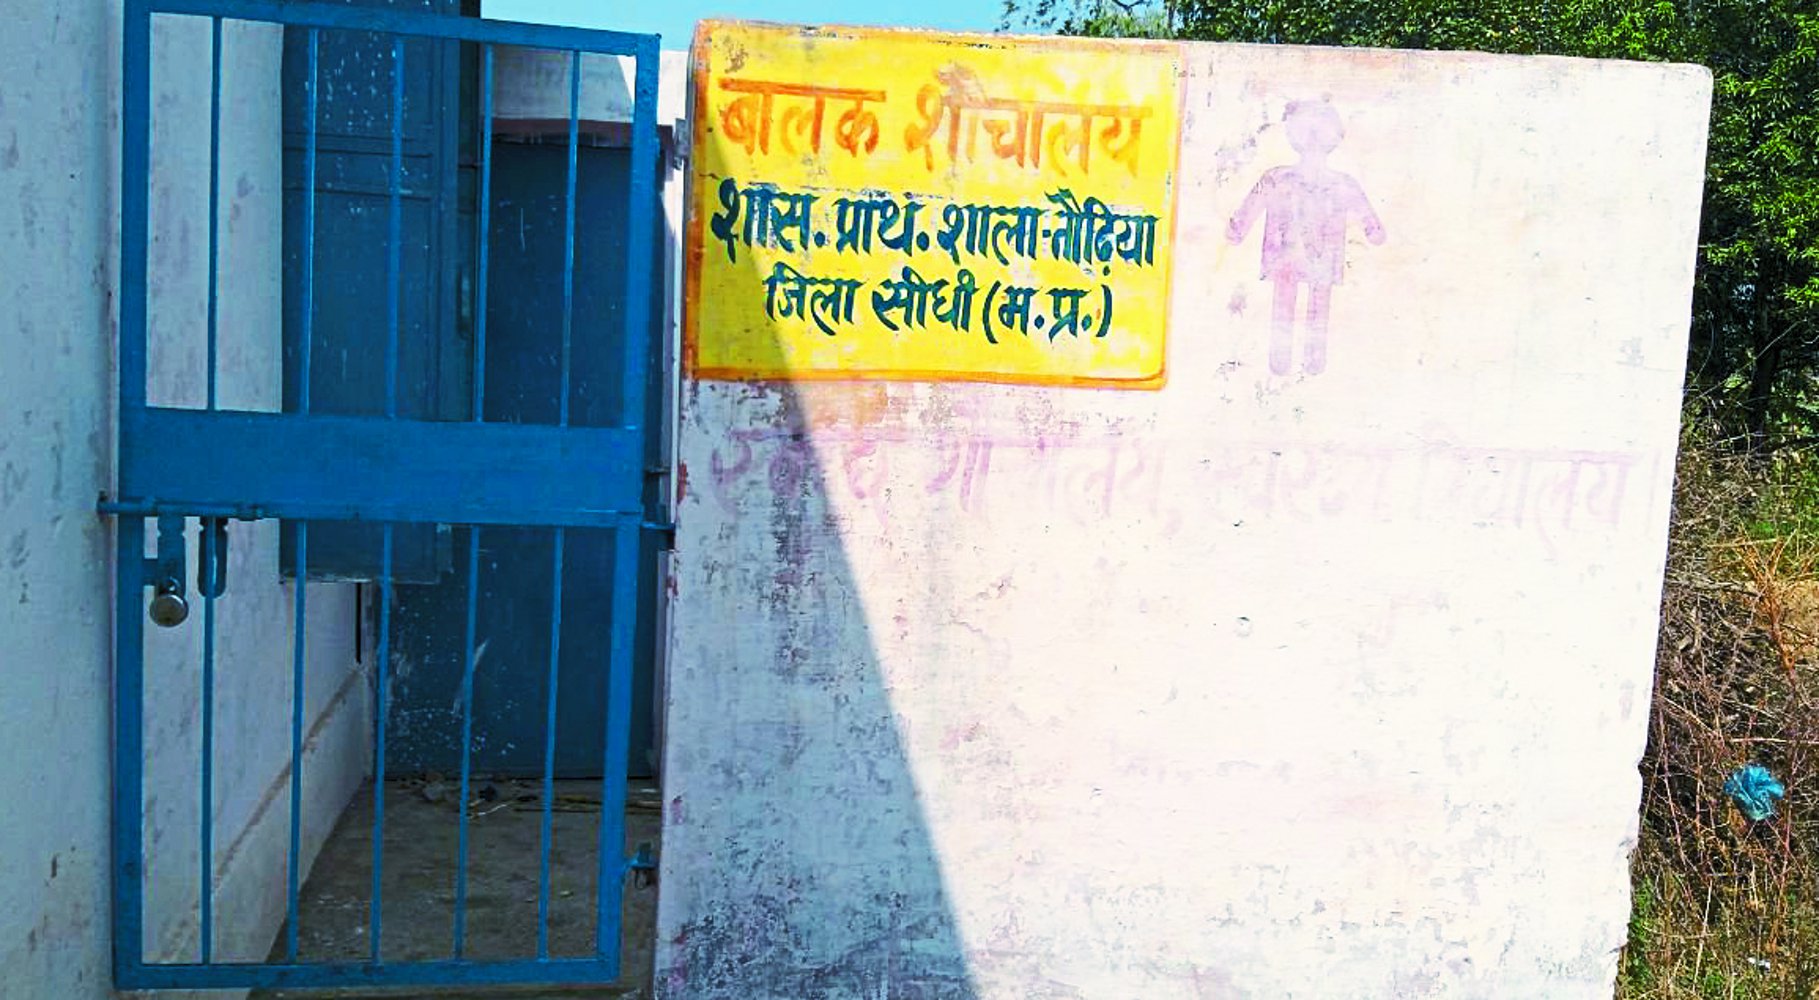 Open pole of sanitation campaign